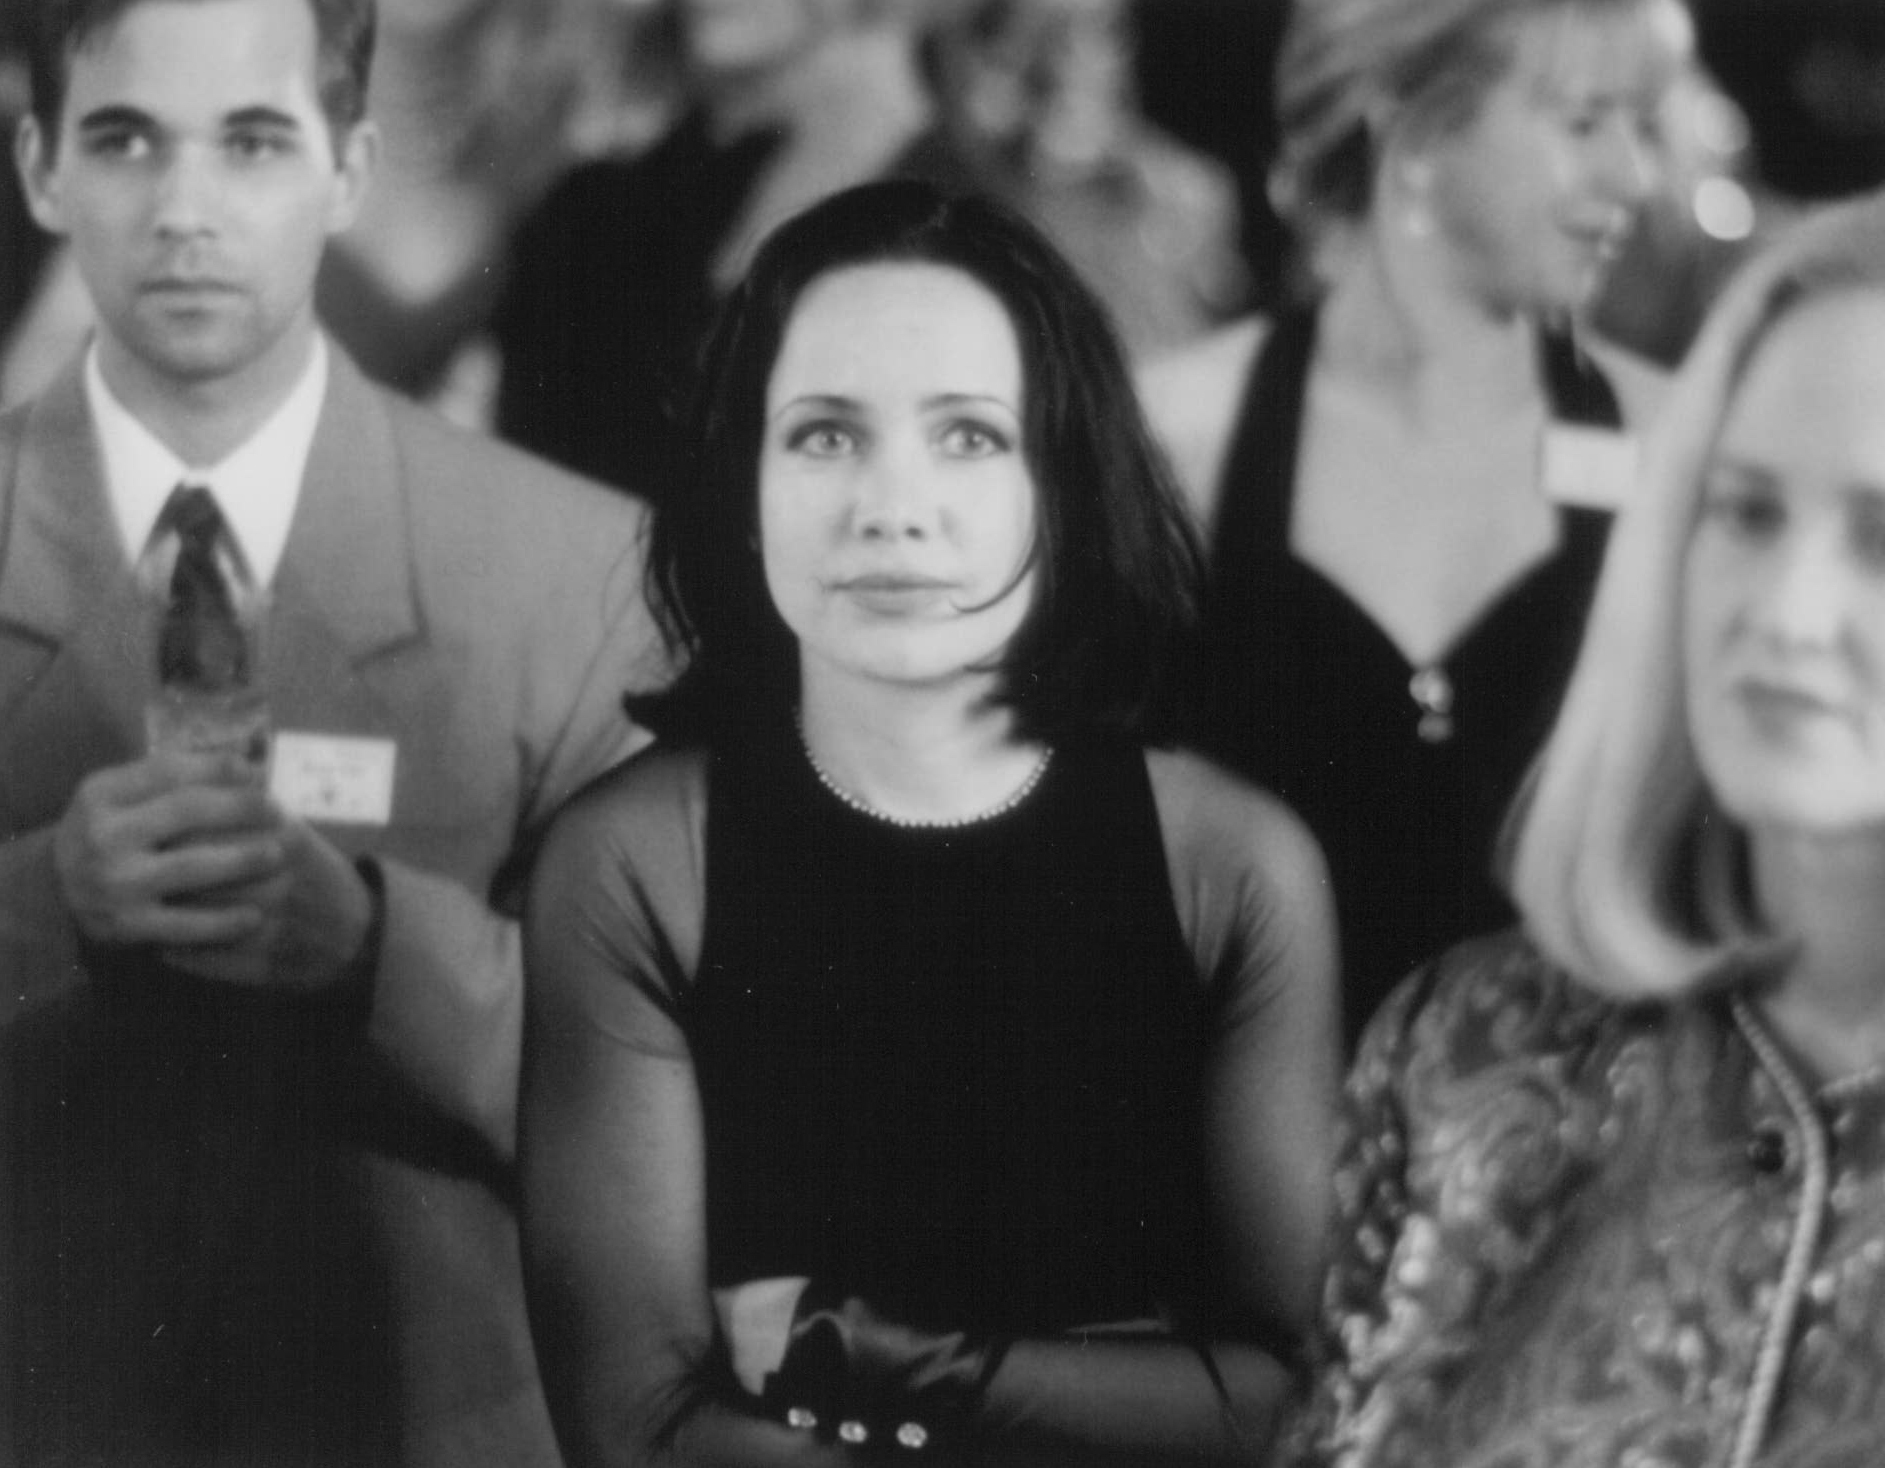 Still of Janeane Garofalo in Romy and Michele's High School Reunion (1997)